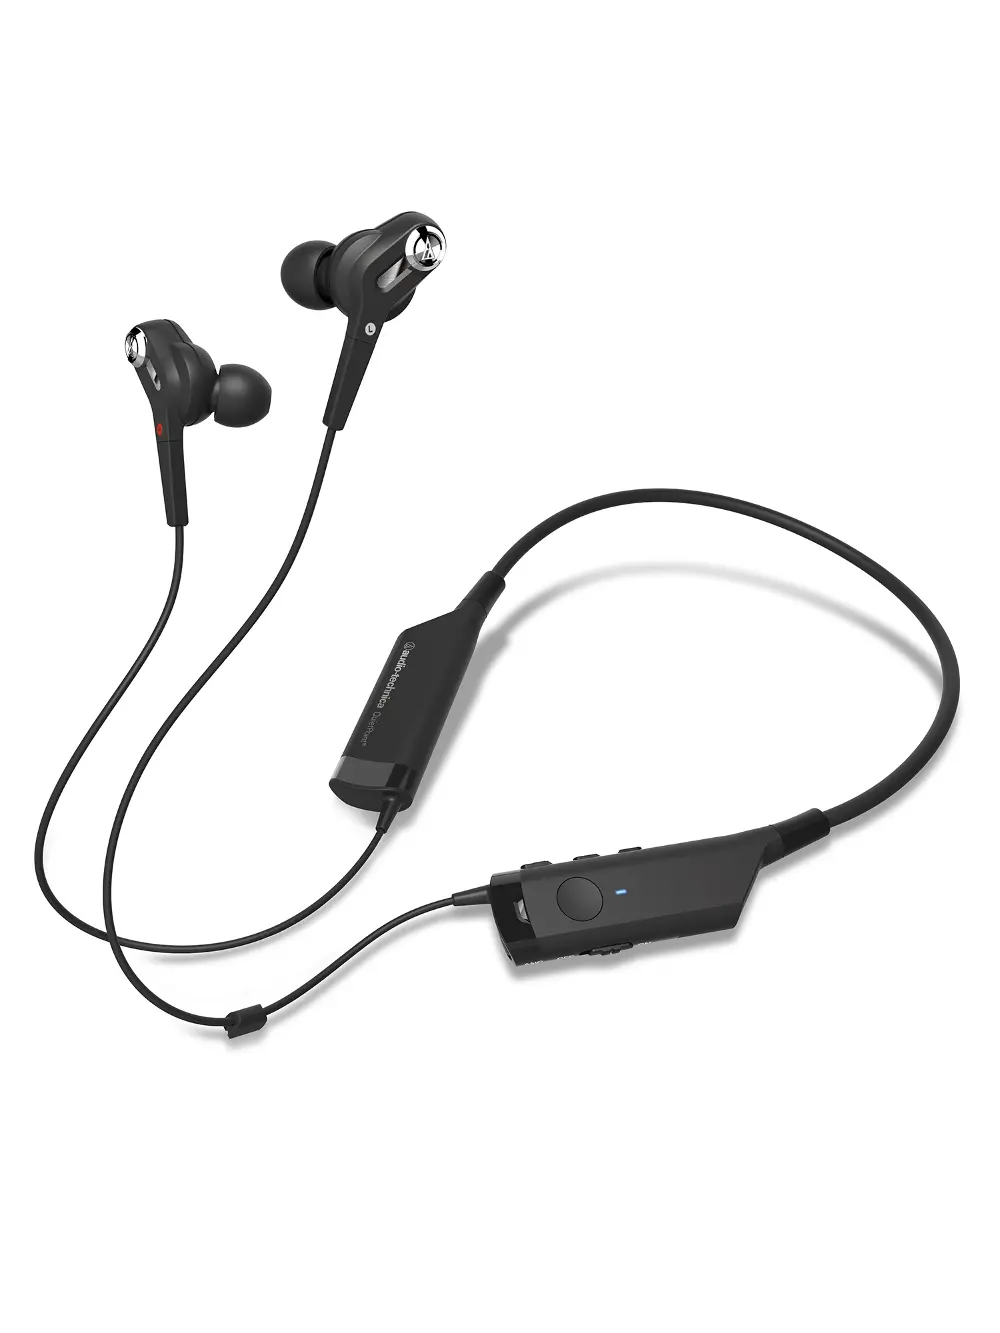 ATH-ANC40B Audio Technica ATH-ANC40BT Wireless Bluetooth Noise-Cancelling Headphones-1